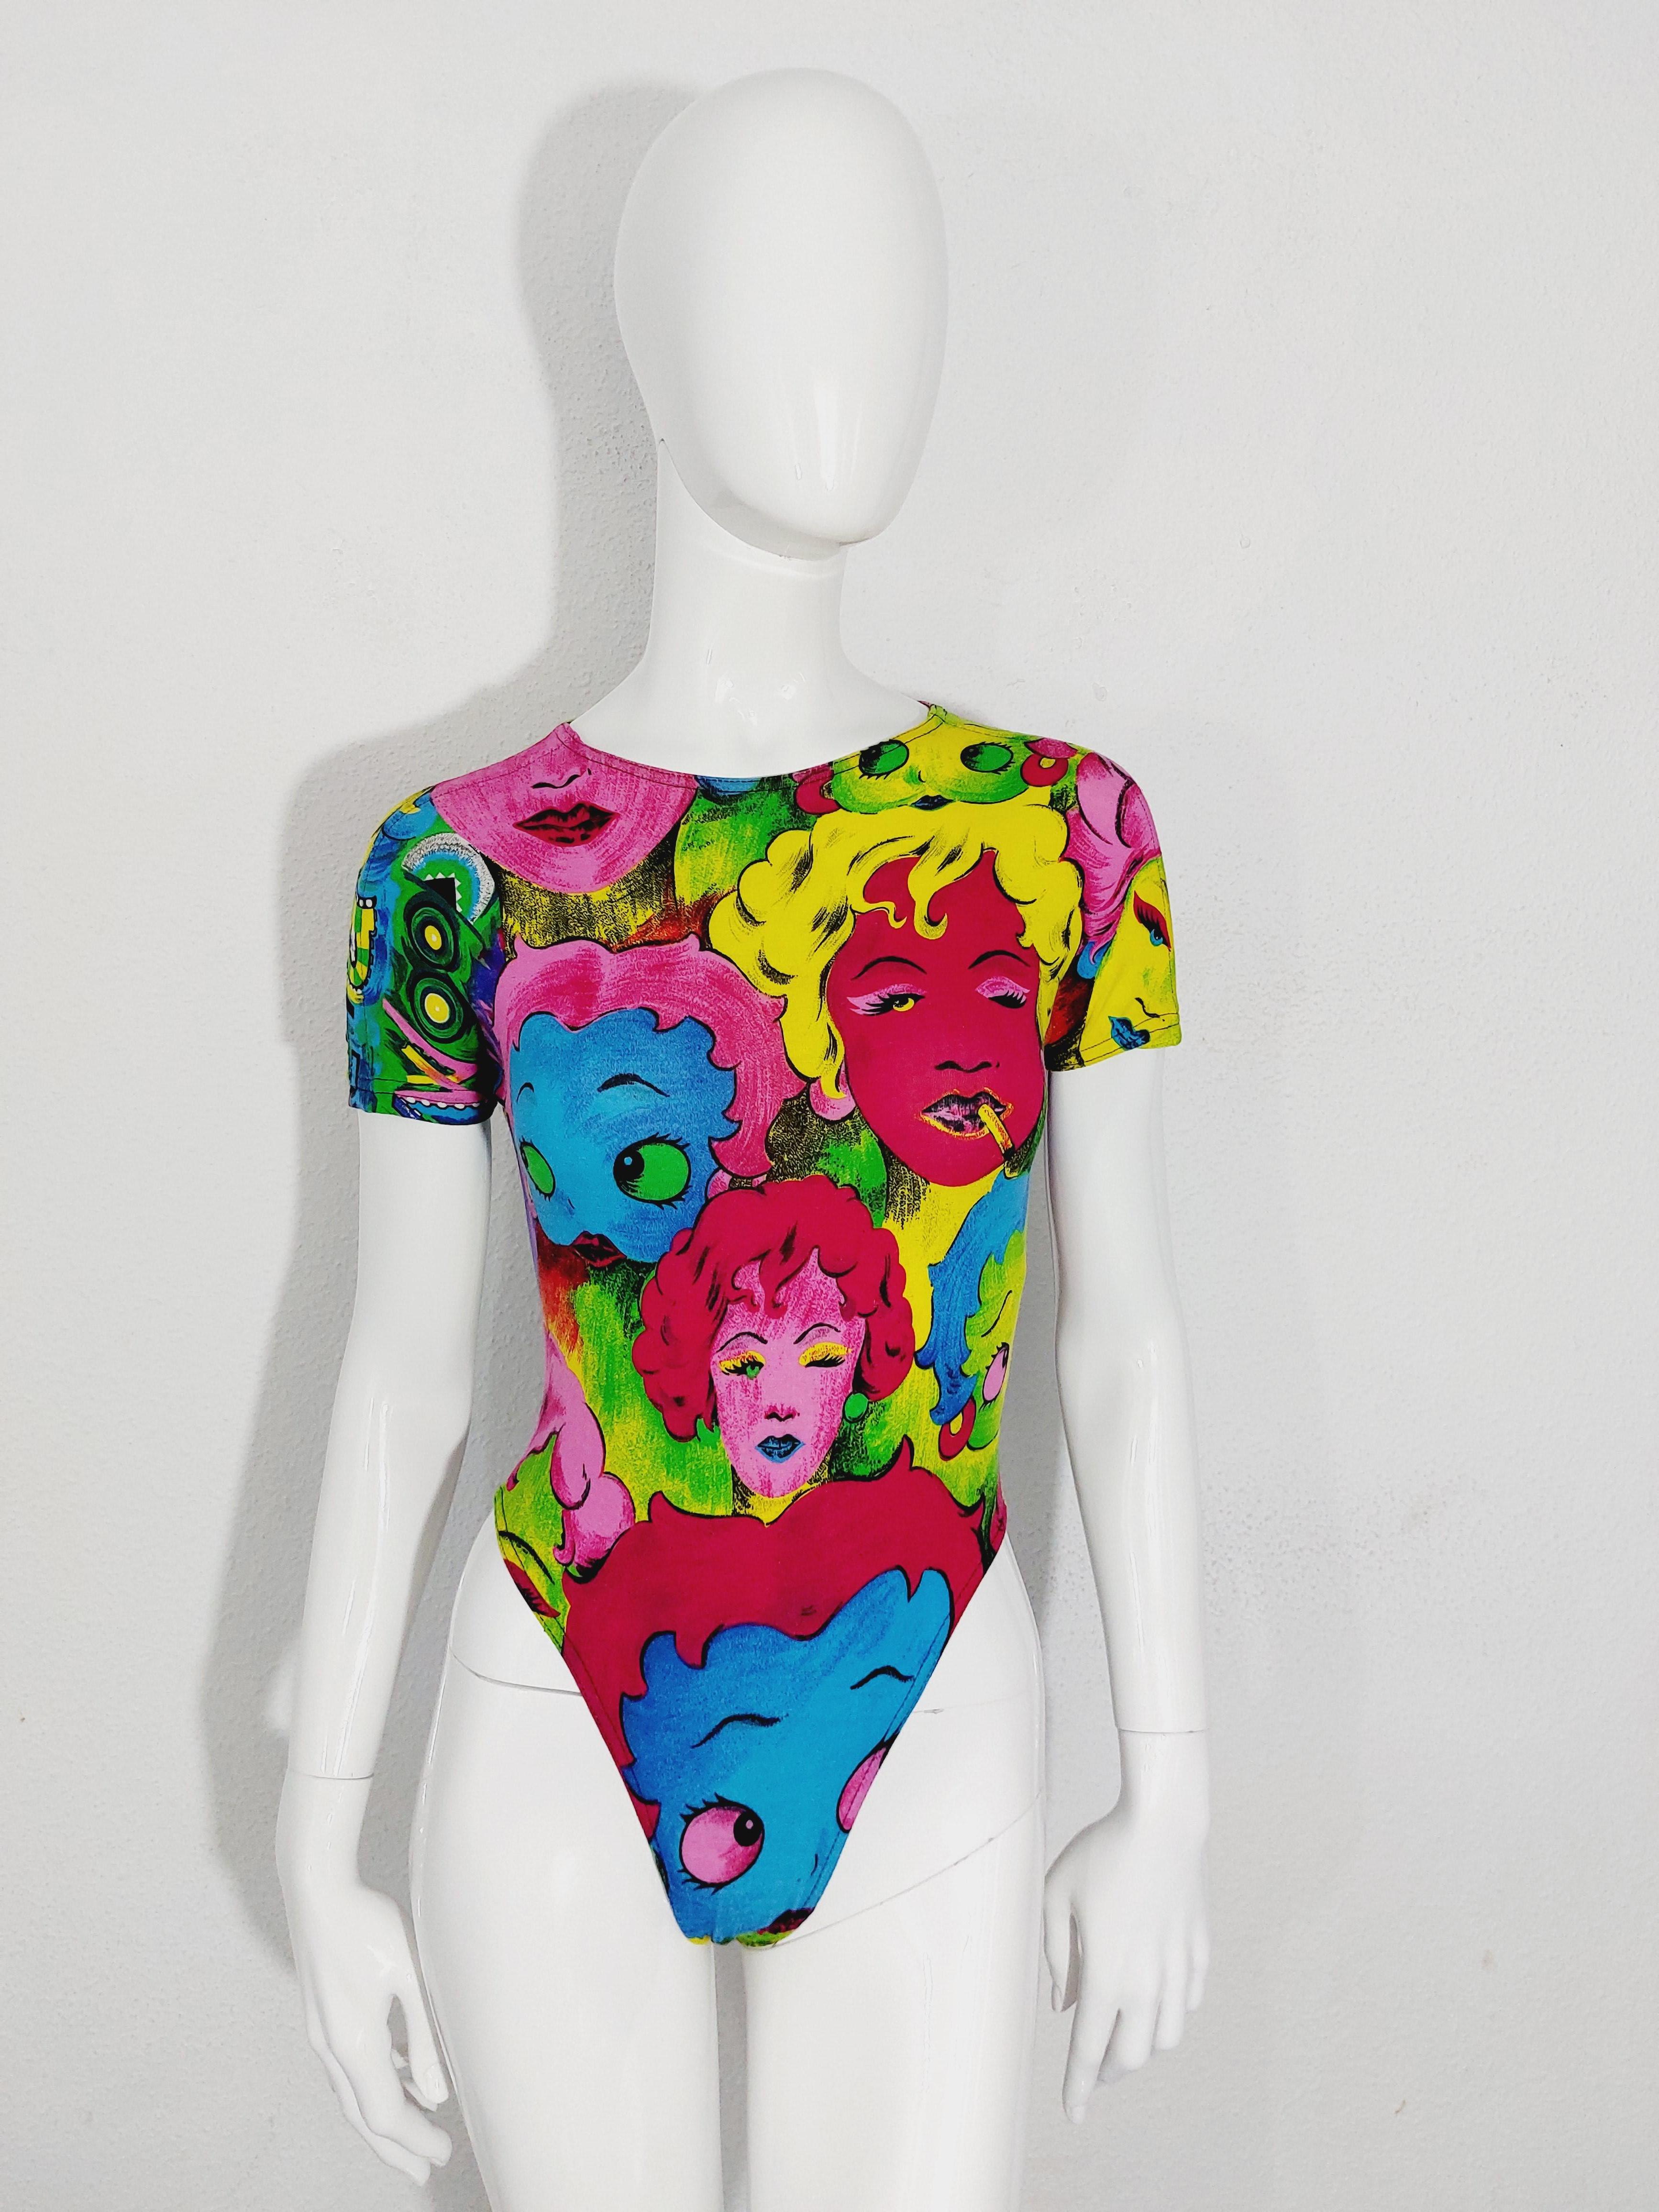 GIANNI VERSACE Andy Warhol Pop Art Marilyn Monroe Betty Boop SS91 Bodyuit Body For Sale 7